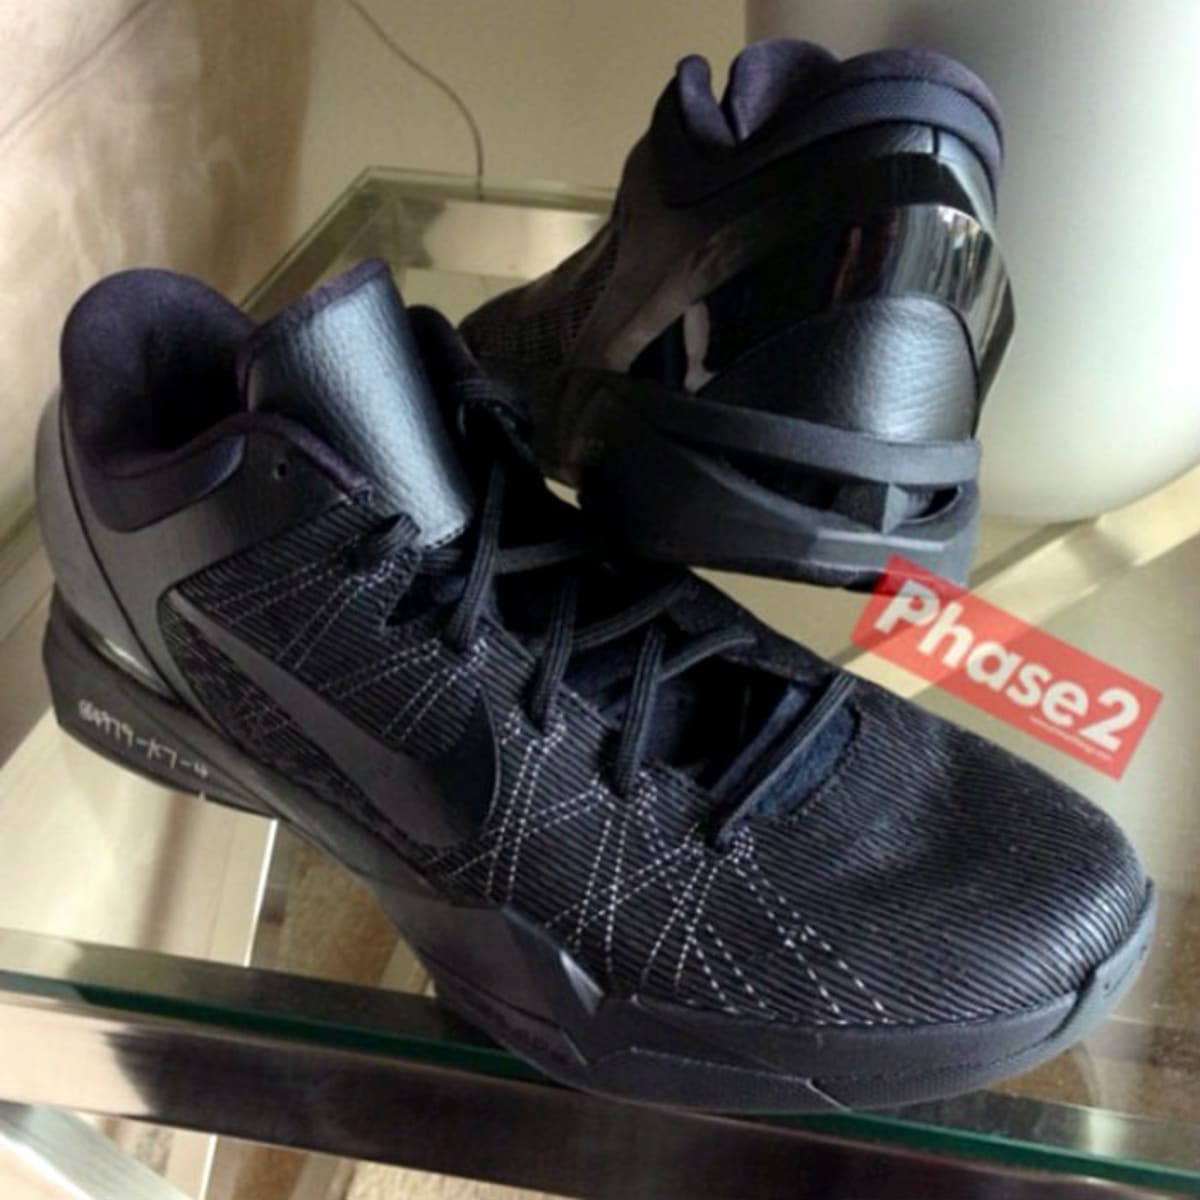 Nike Kobe 7 Wear-Test Sample - Unreleased Nike Kobe Samples | Sole ...